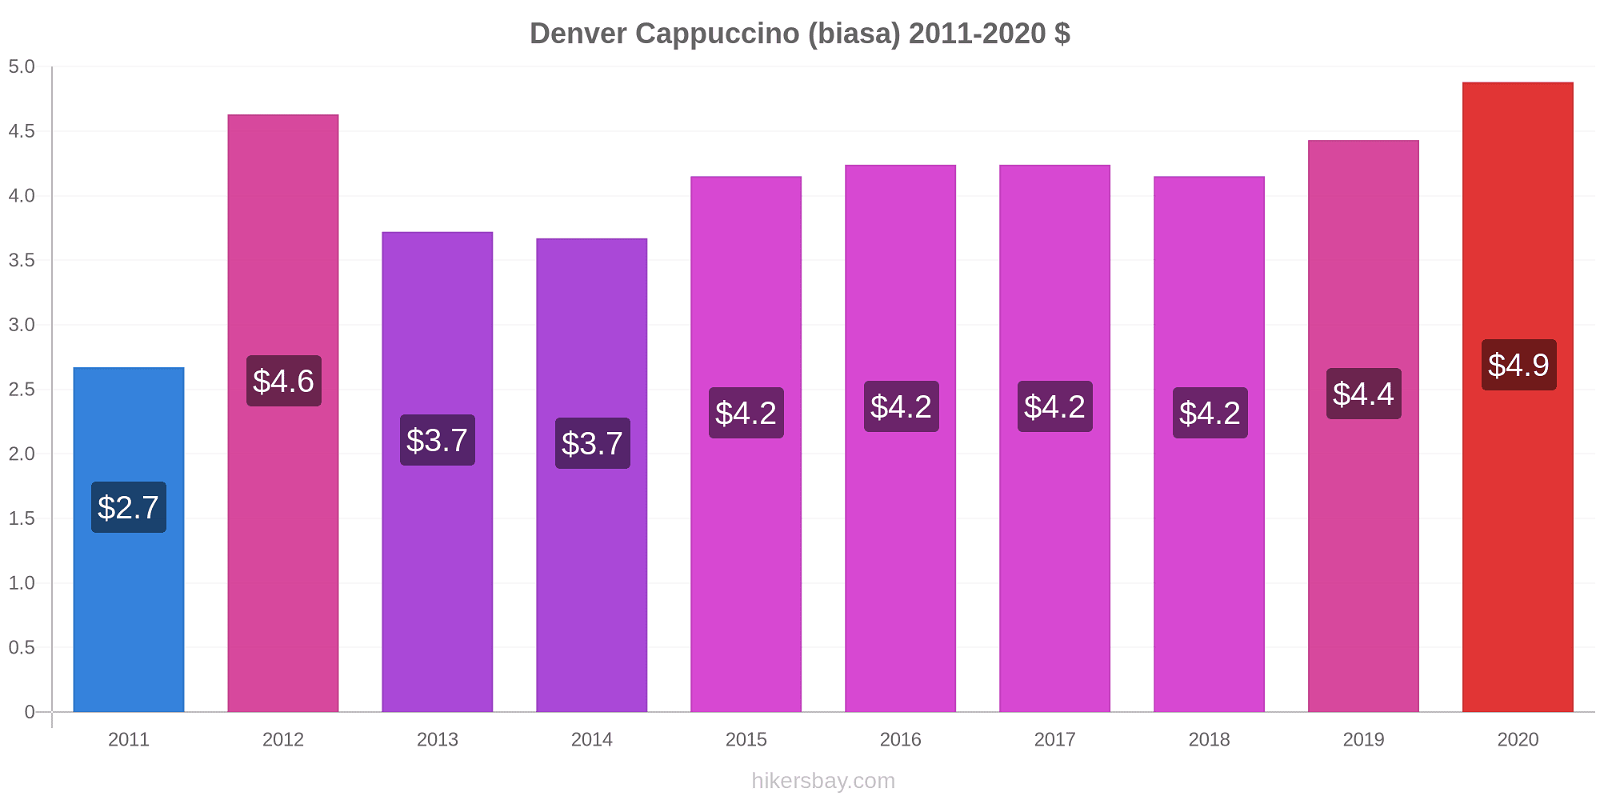 Denver perubahan harga Cappuccino (biasa) hikersbay.com